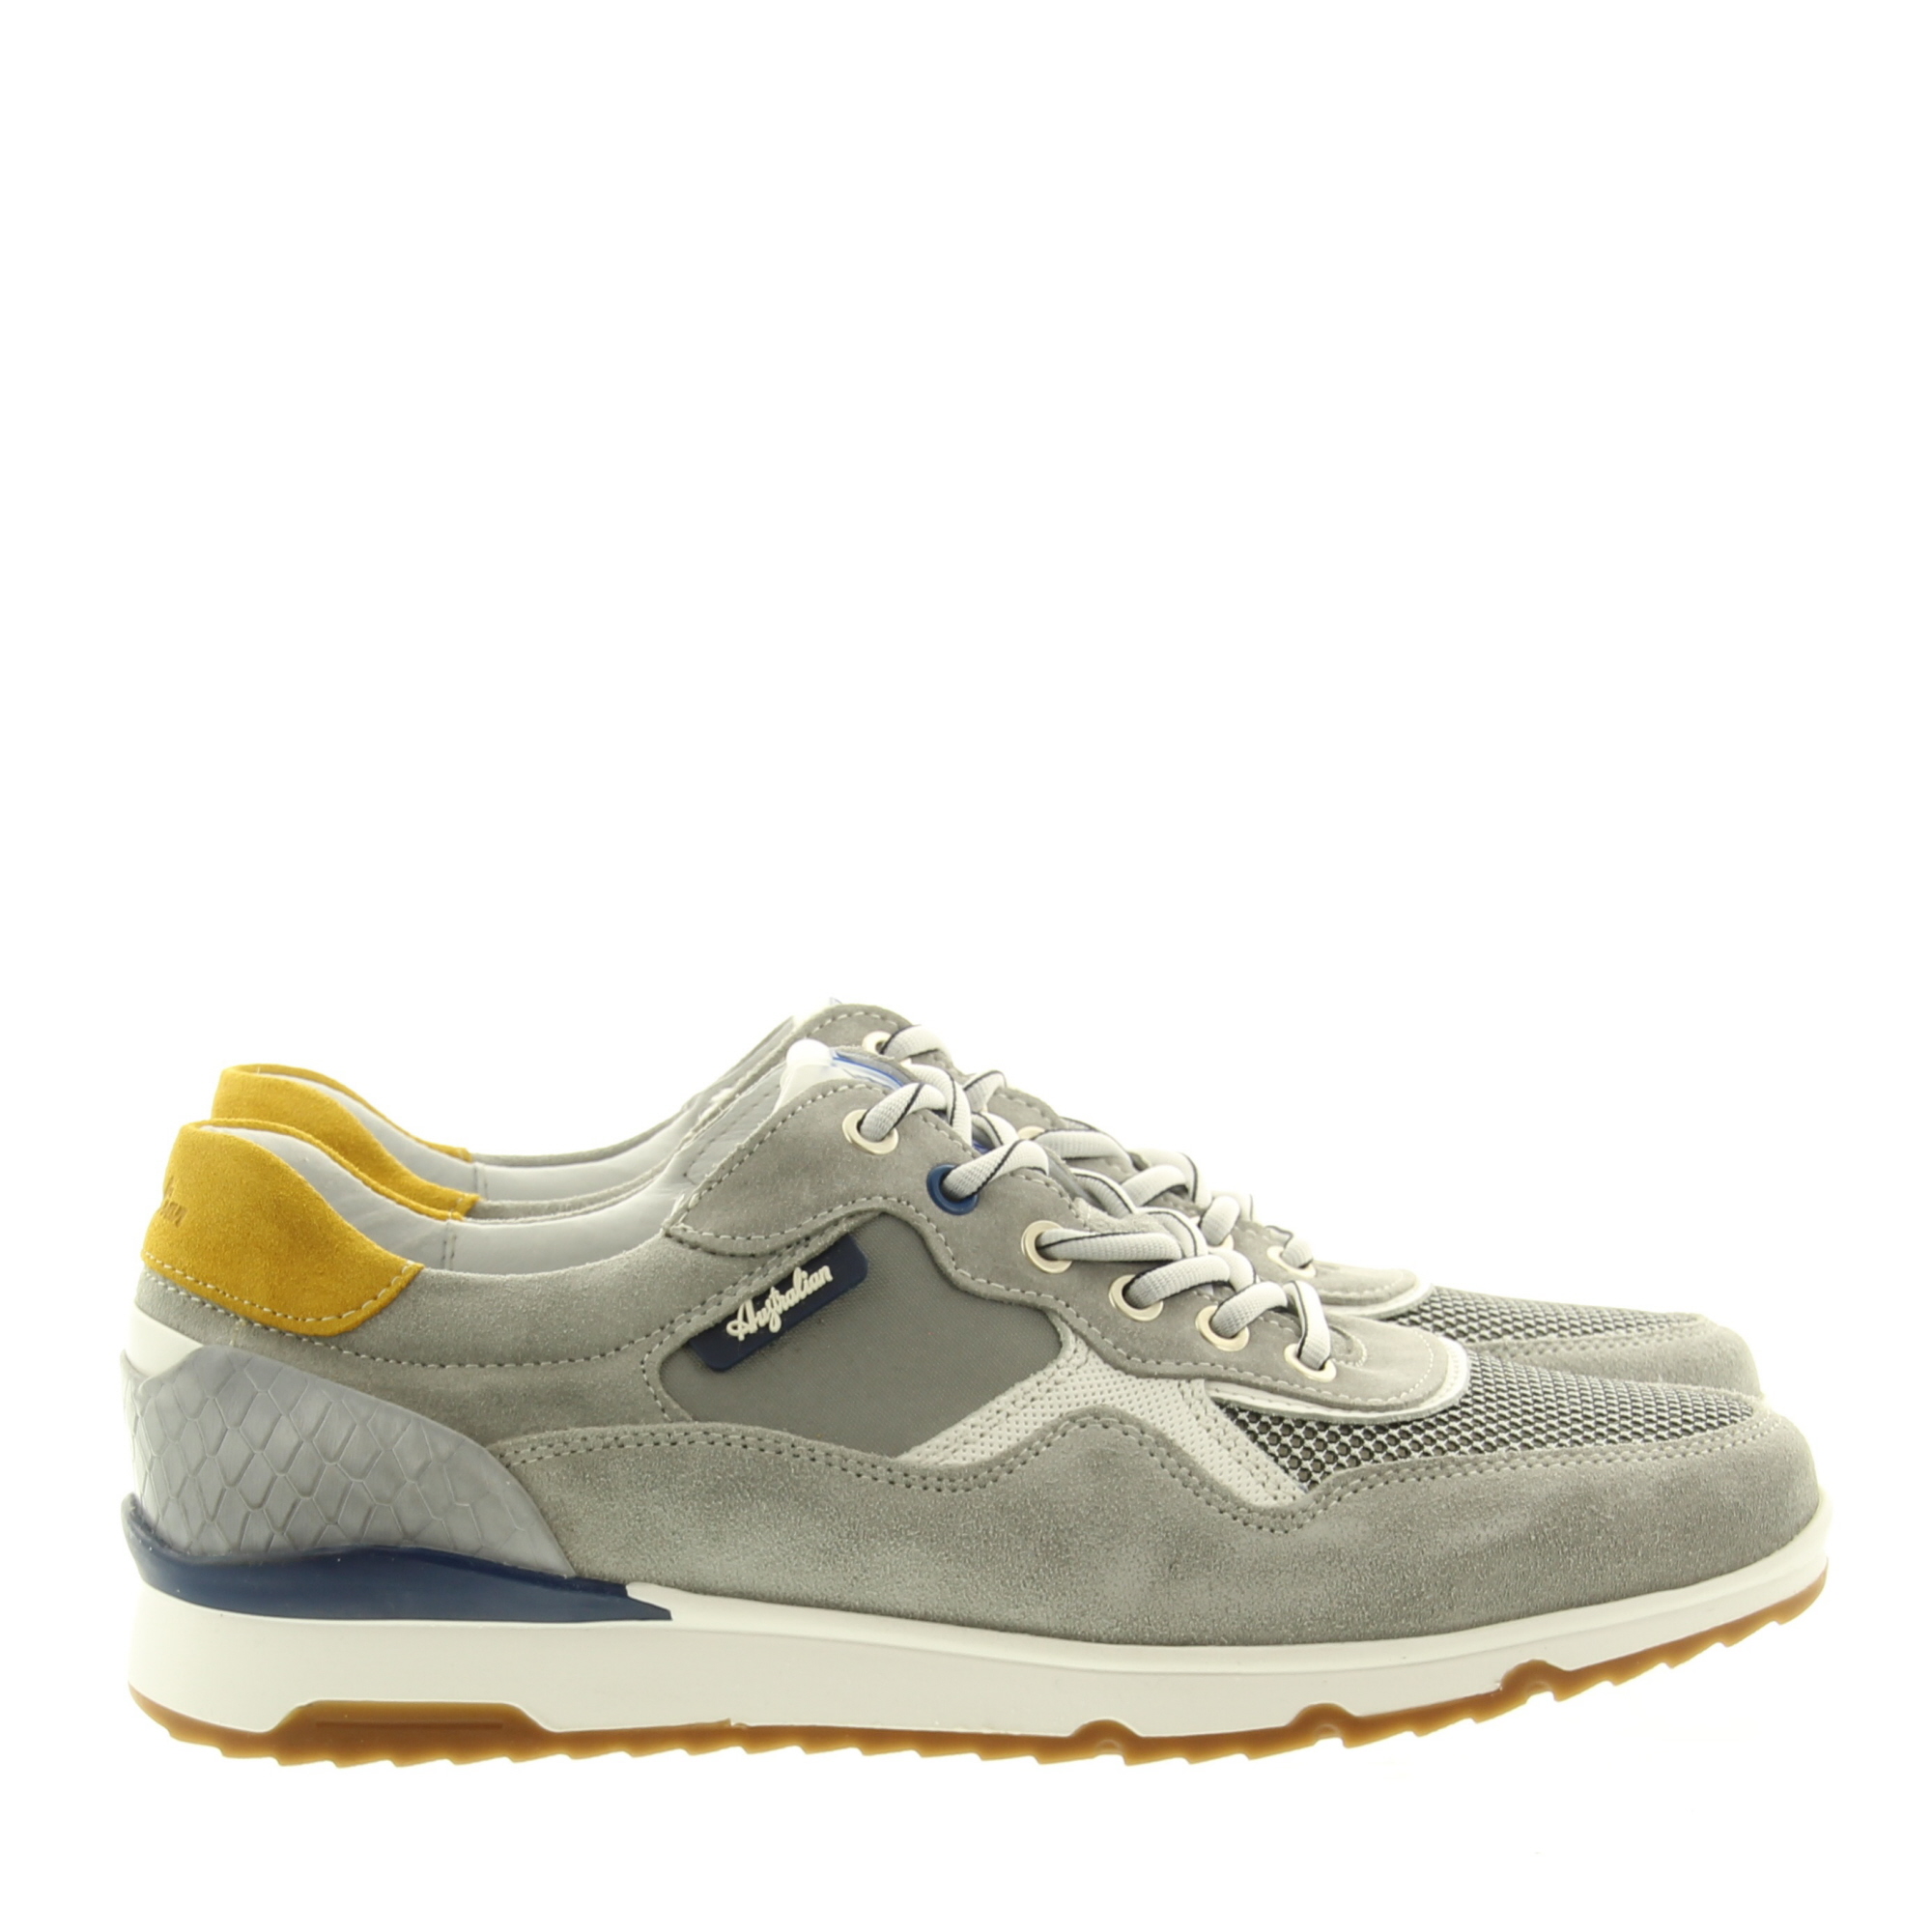 Australian Footwear Mazoni 15.1519.03 KG8 Grey White Yelllow